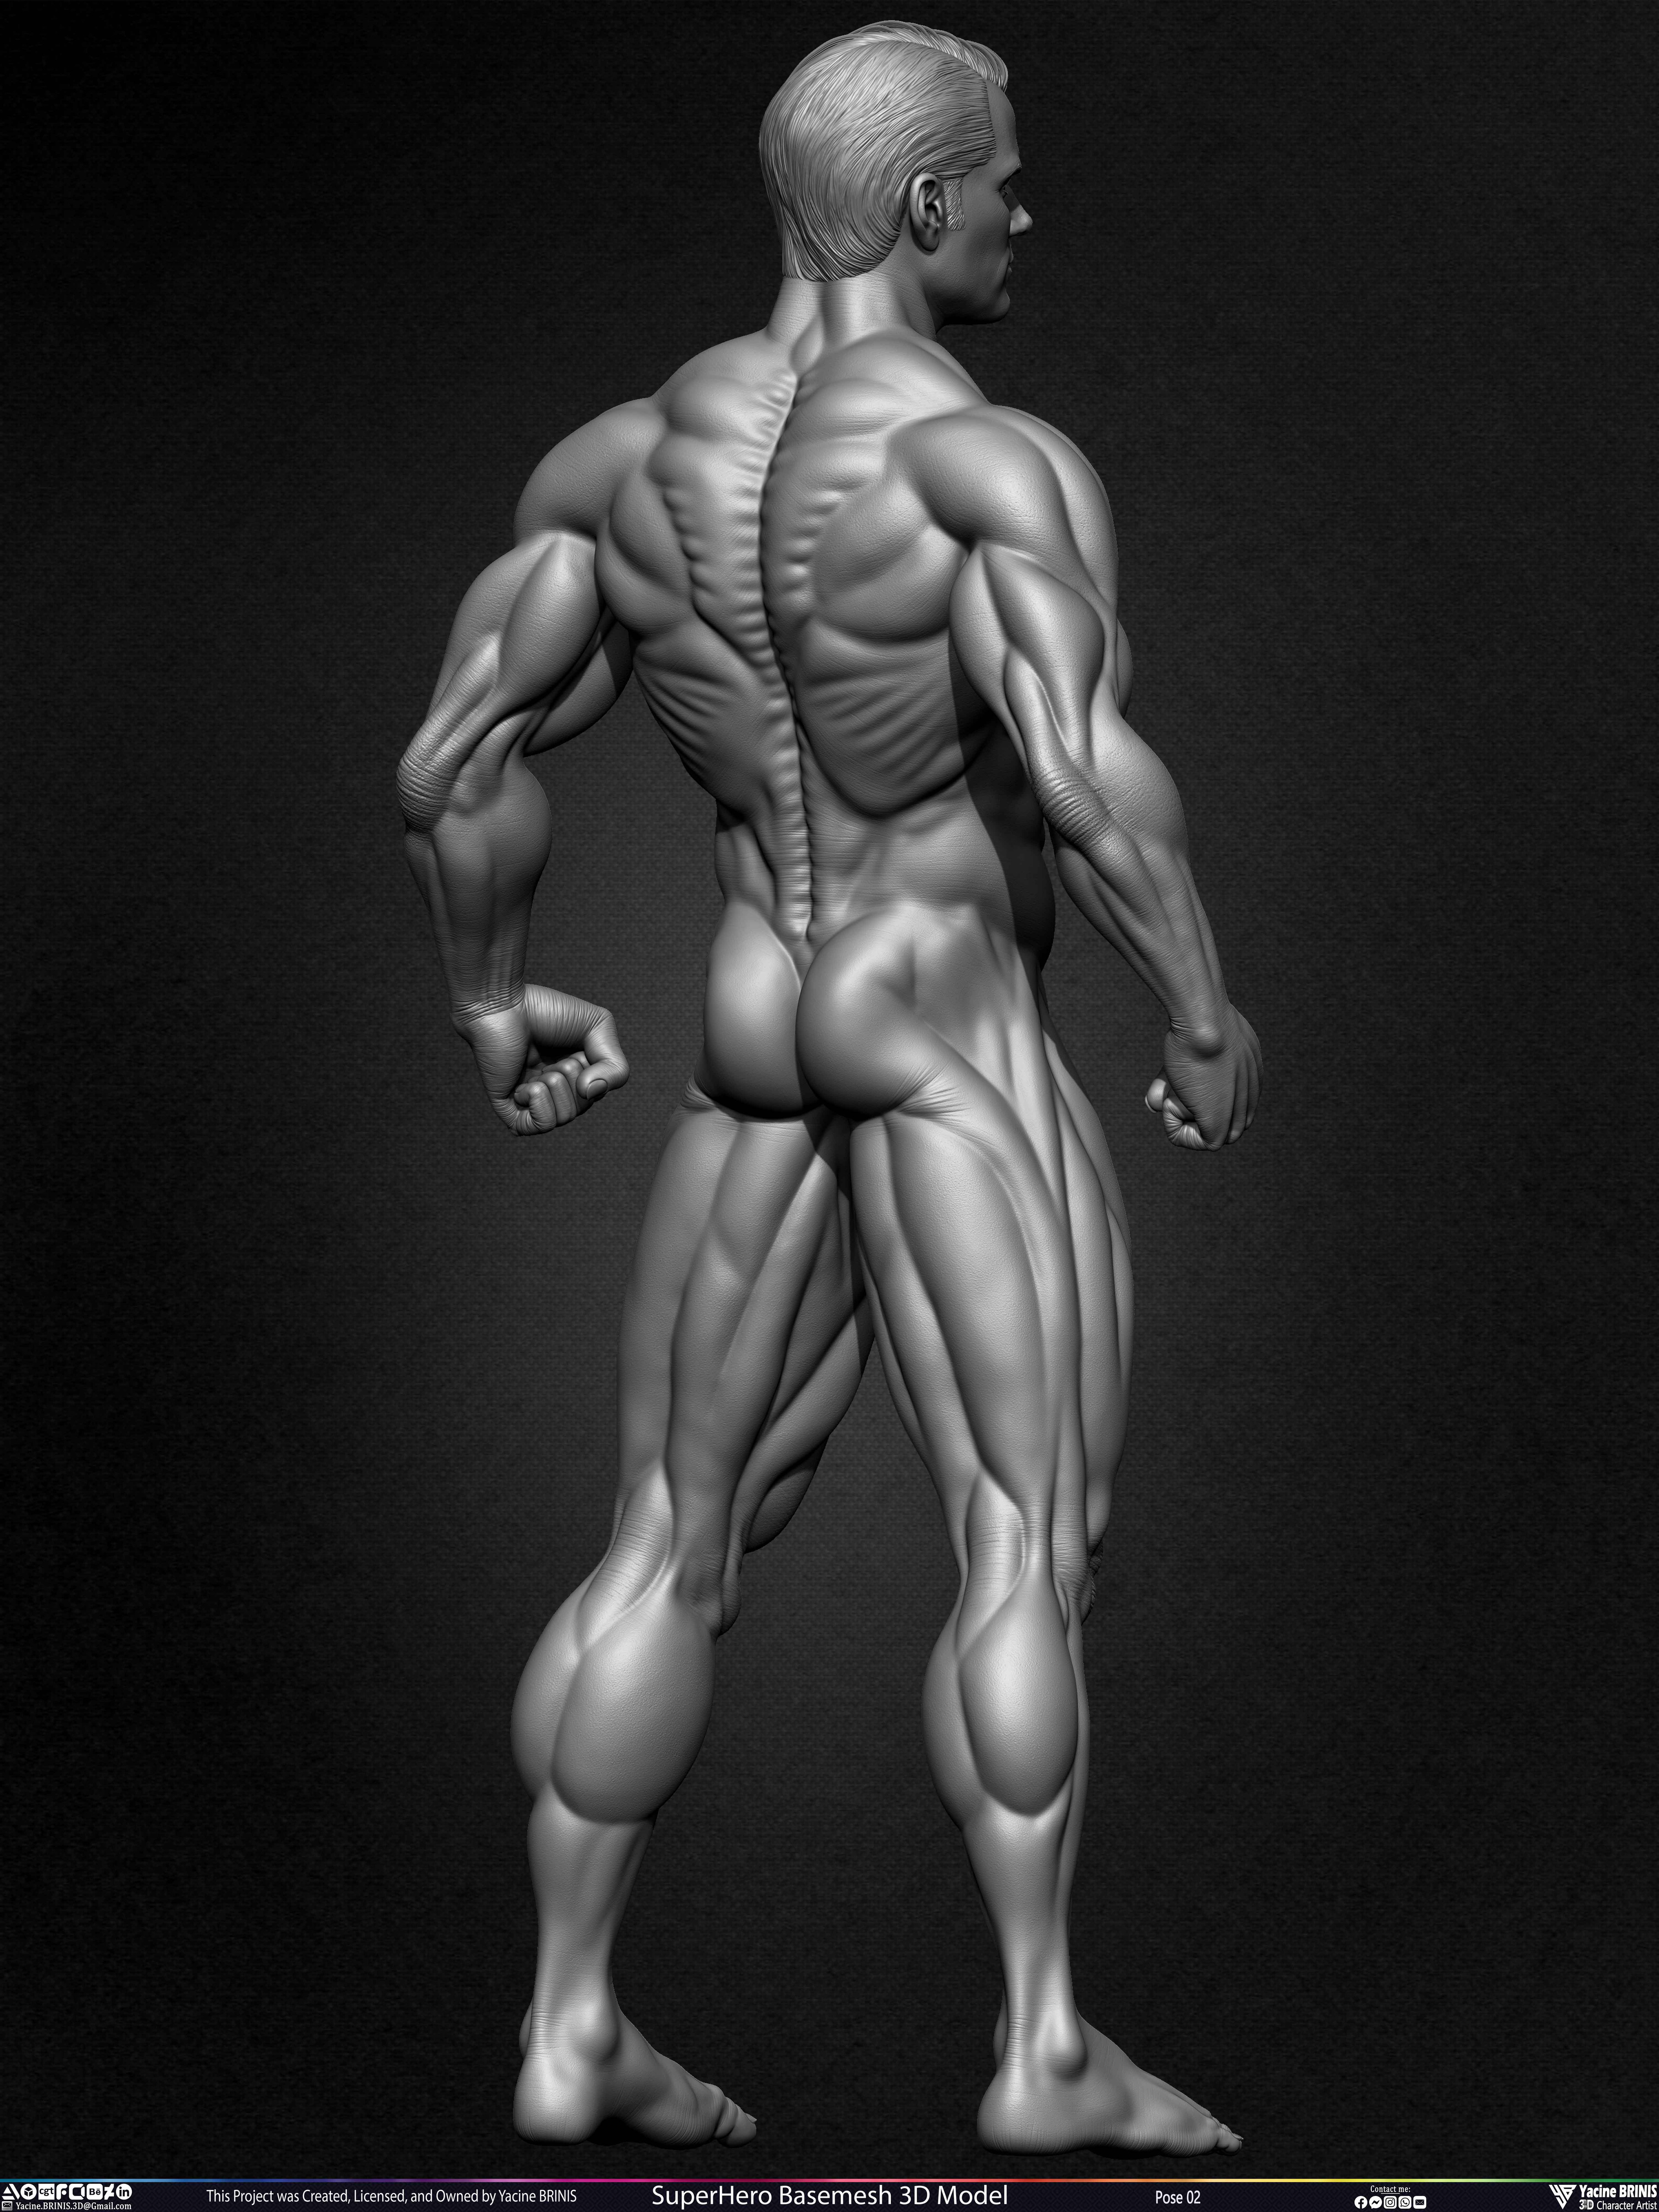 Super-Hero Basemesh 3D Model - Henry Cavill- Man of Steel - Superman - Pose 02 Sculpted by Yacine BRINIS Set 007